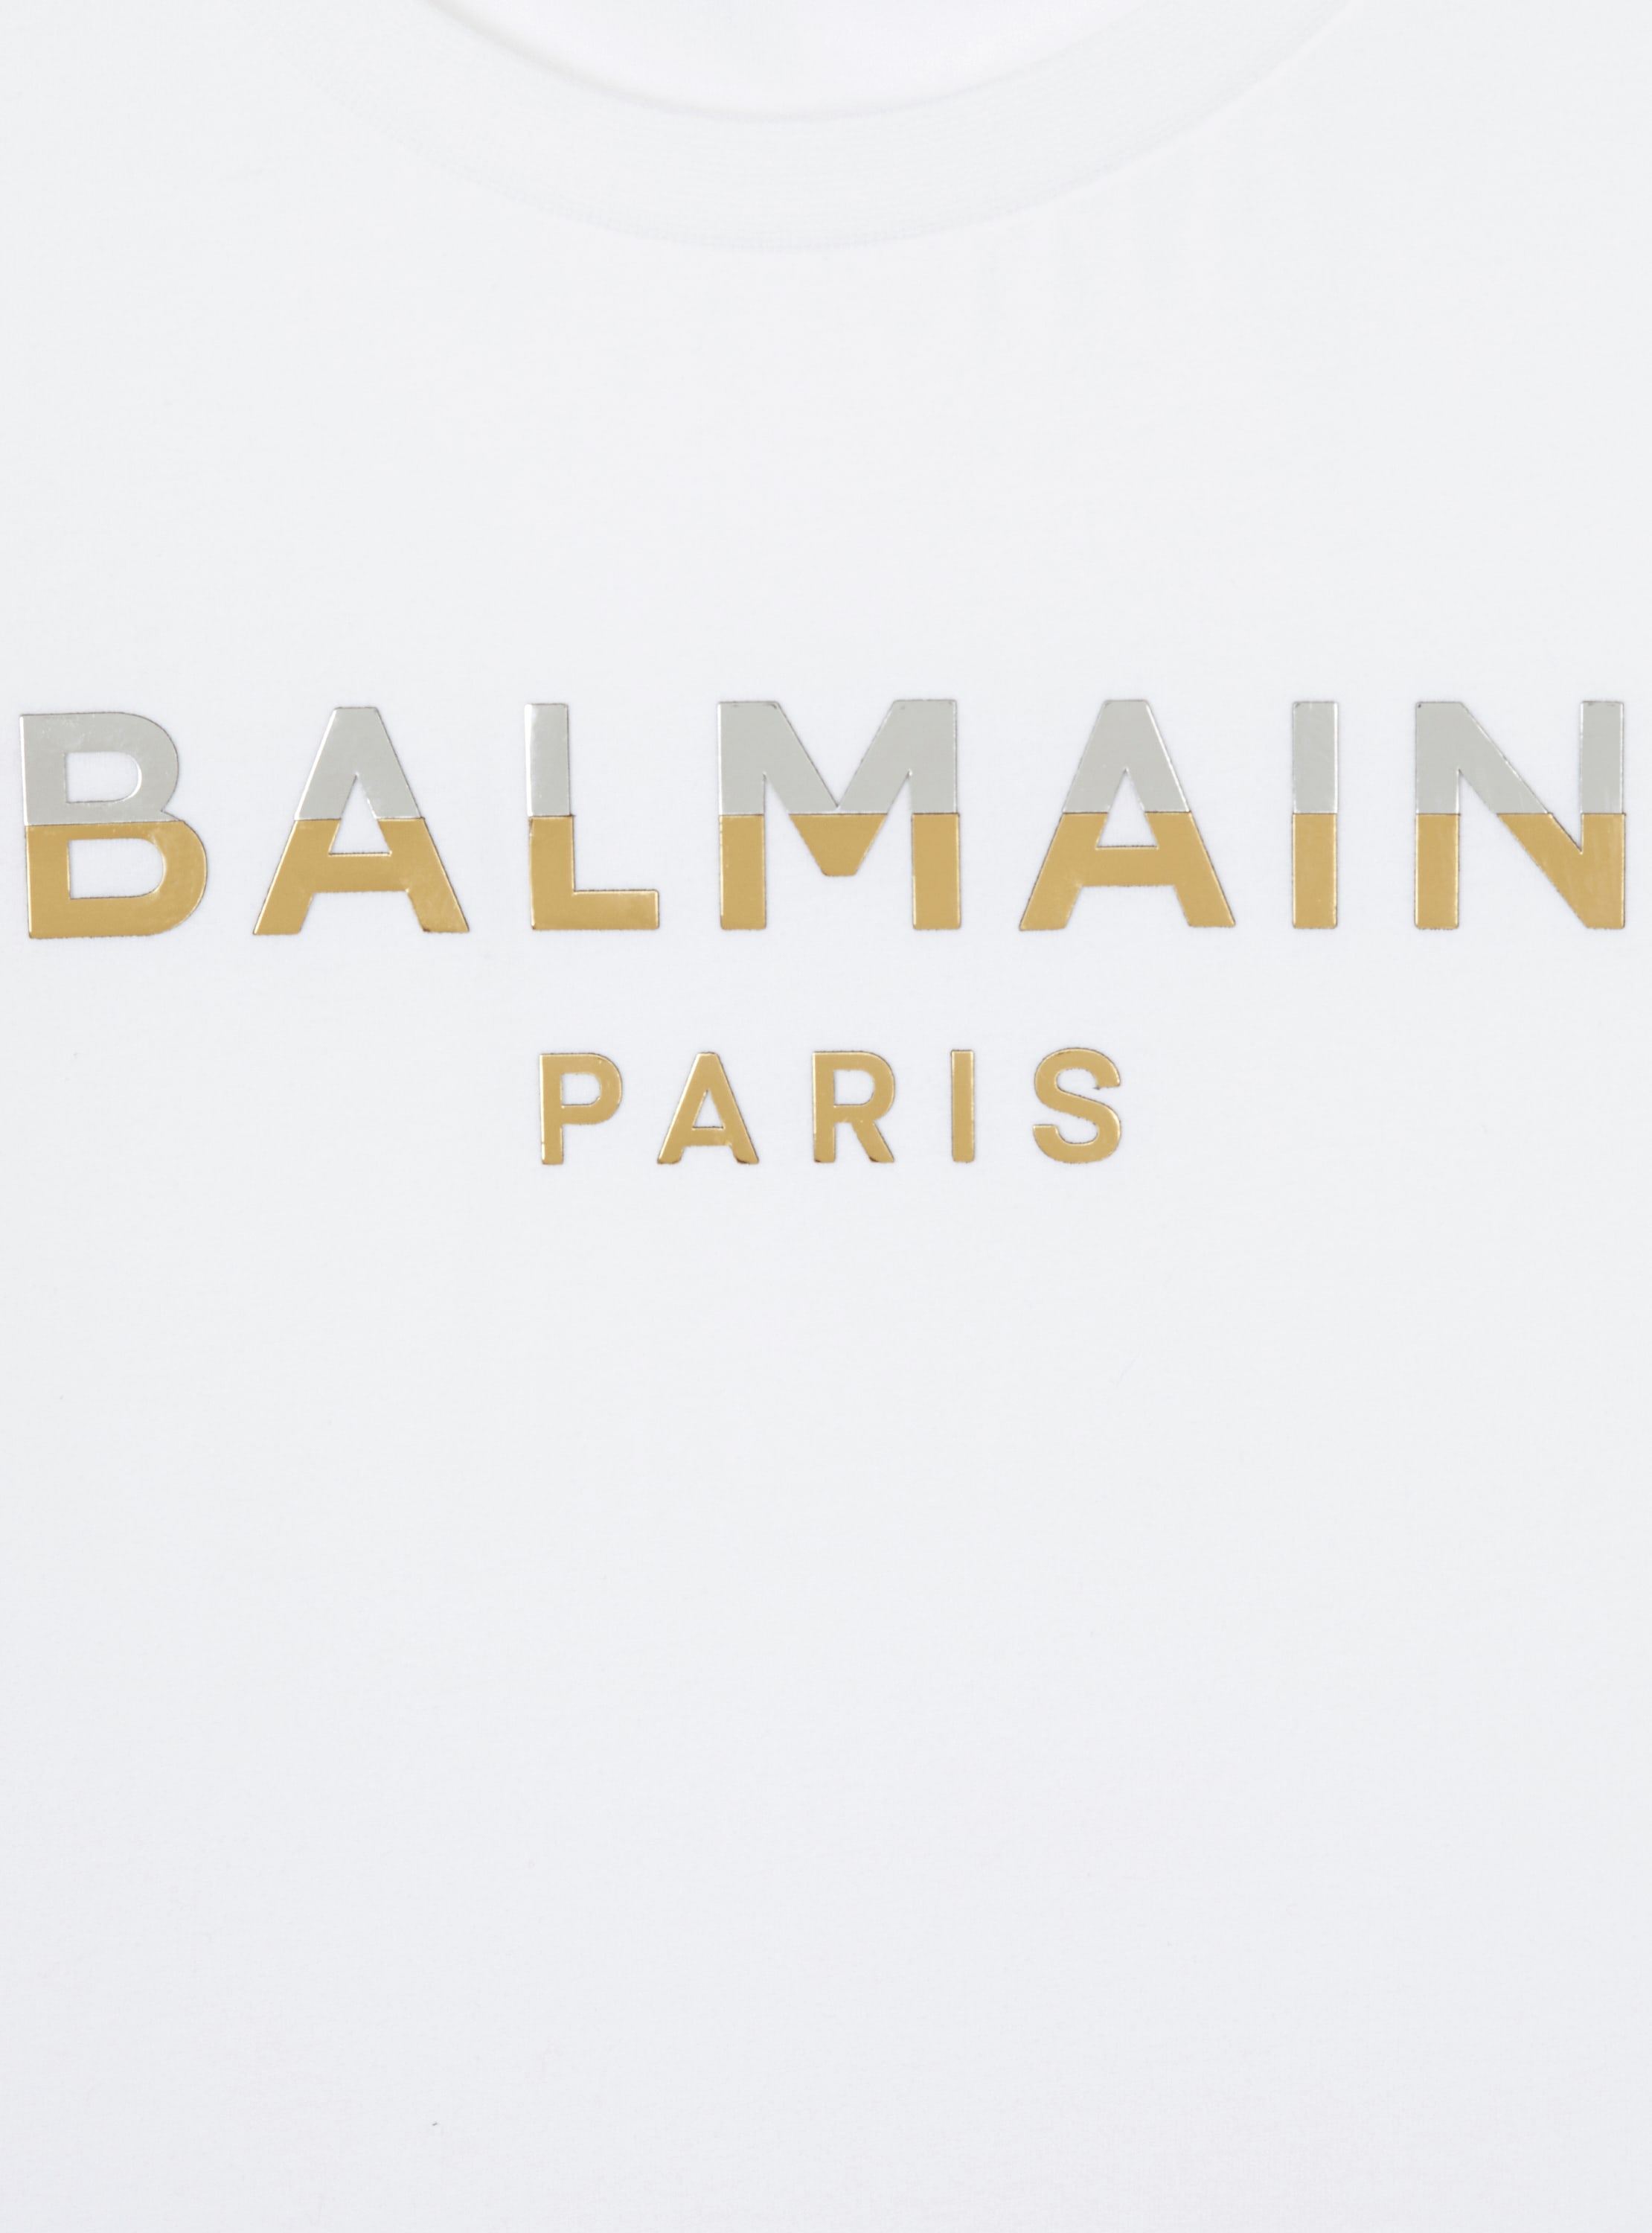 Balmain Paris 金属 T 恤